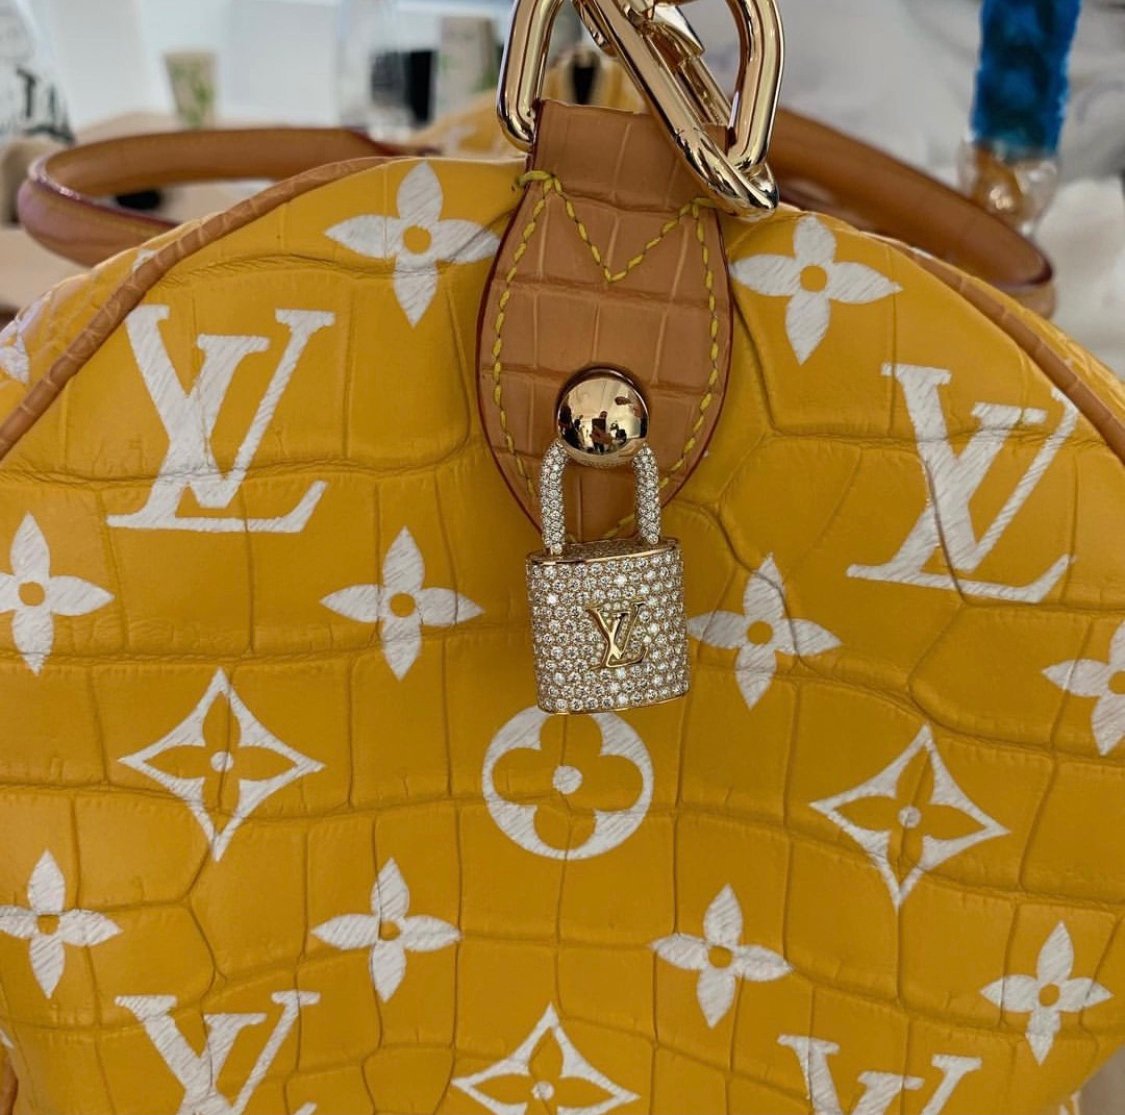 LV Most expensive bag ever? Millionaire Speedy! 🤯 #lvbag